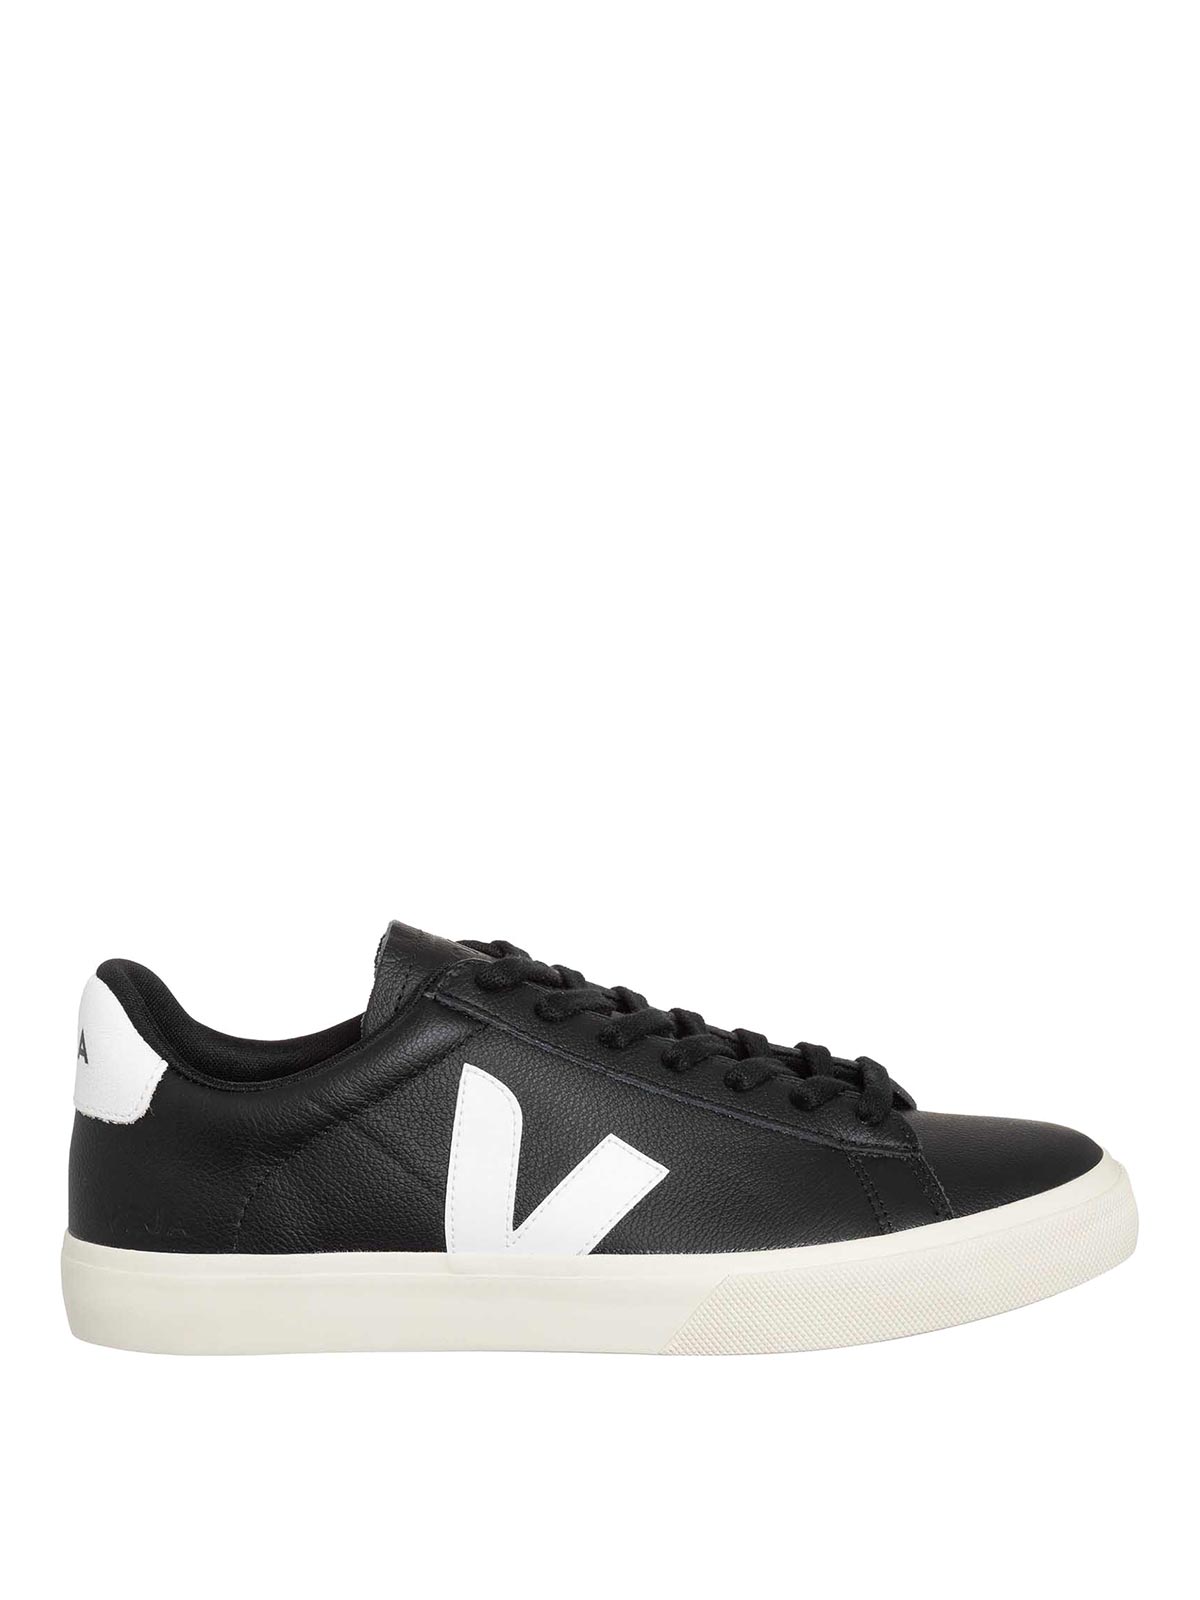 Veja Campo Sneaker In Black White Leather For Women